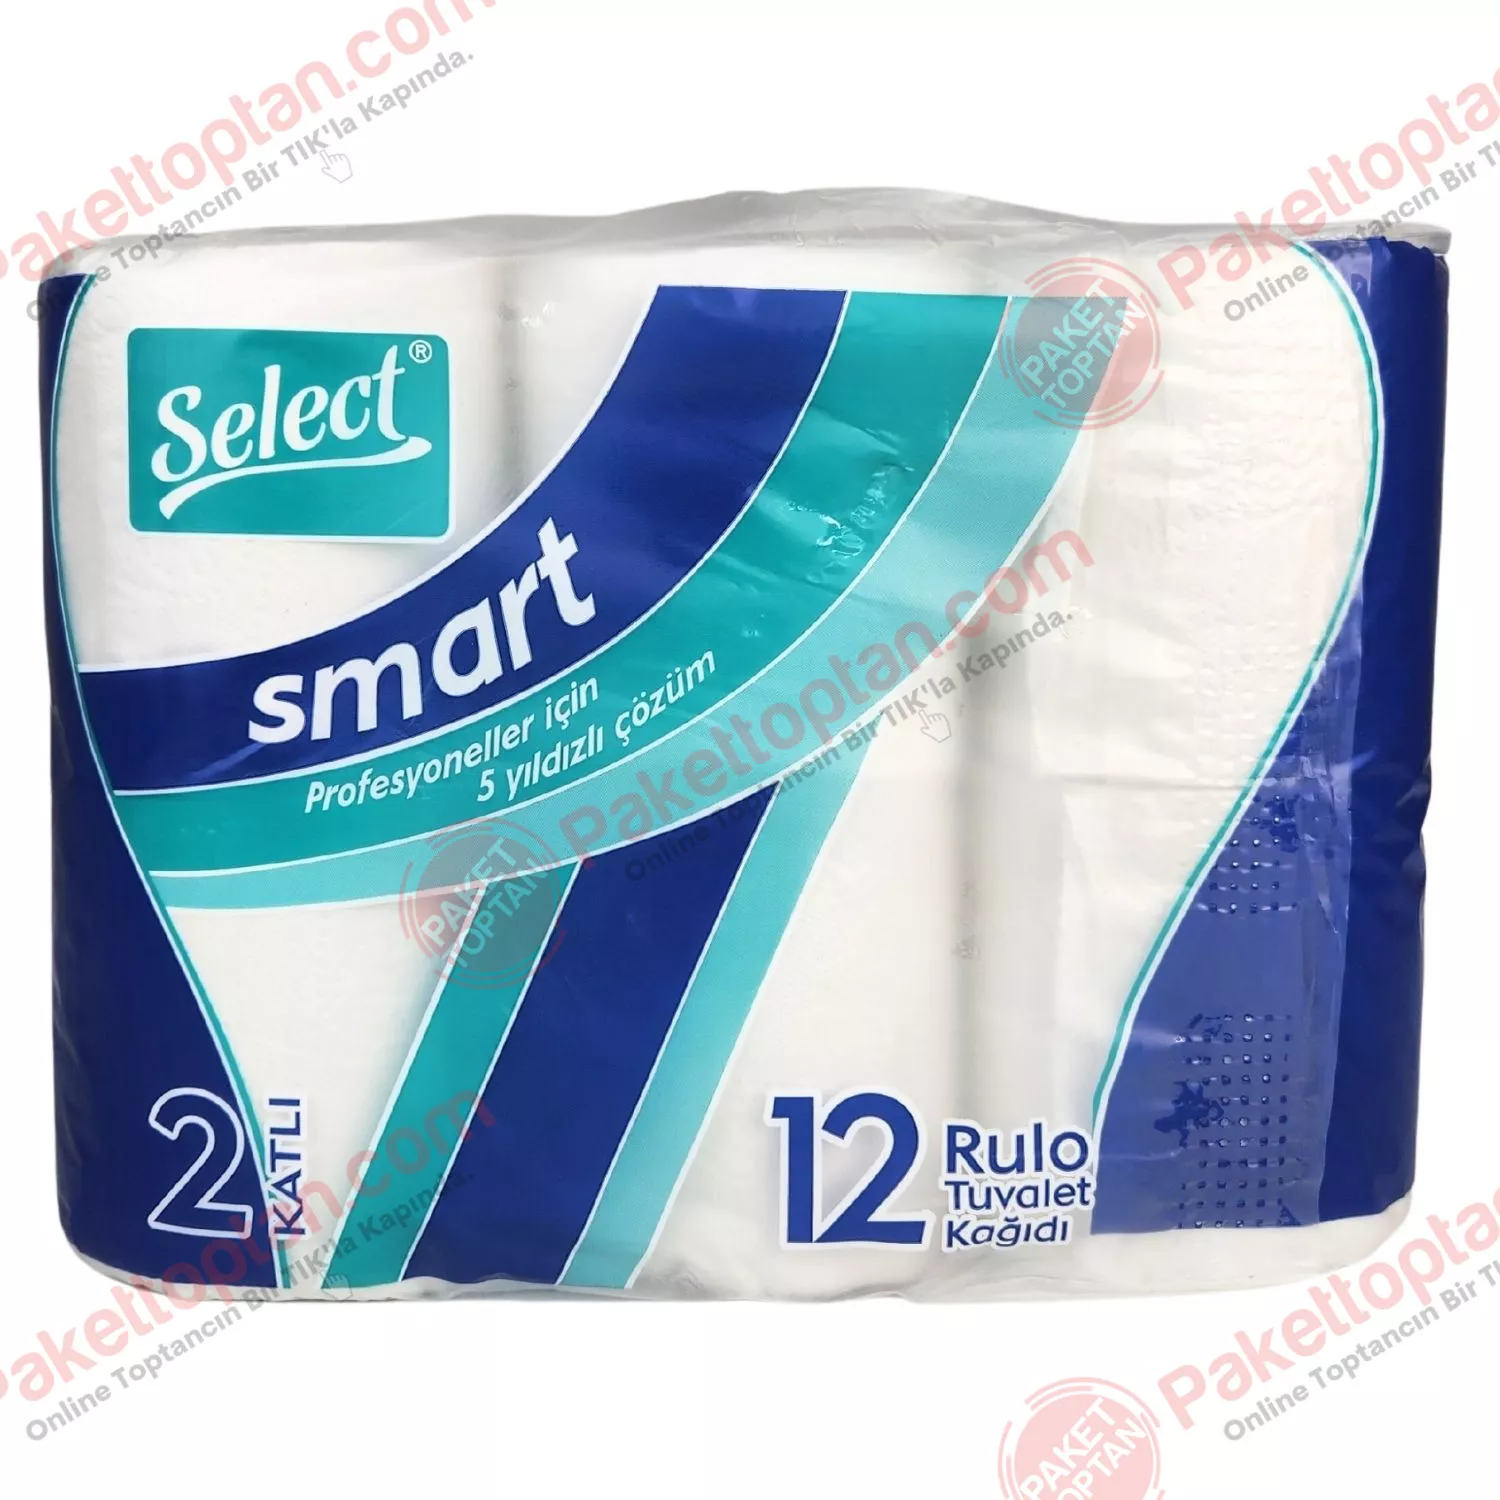 Select Smart 12 li Tuvalet Kağıdı 